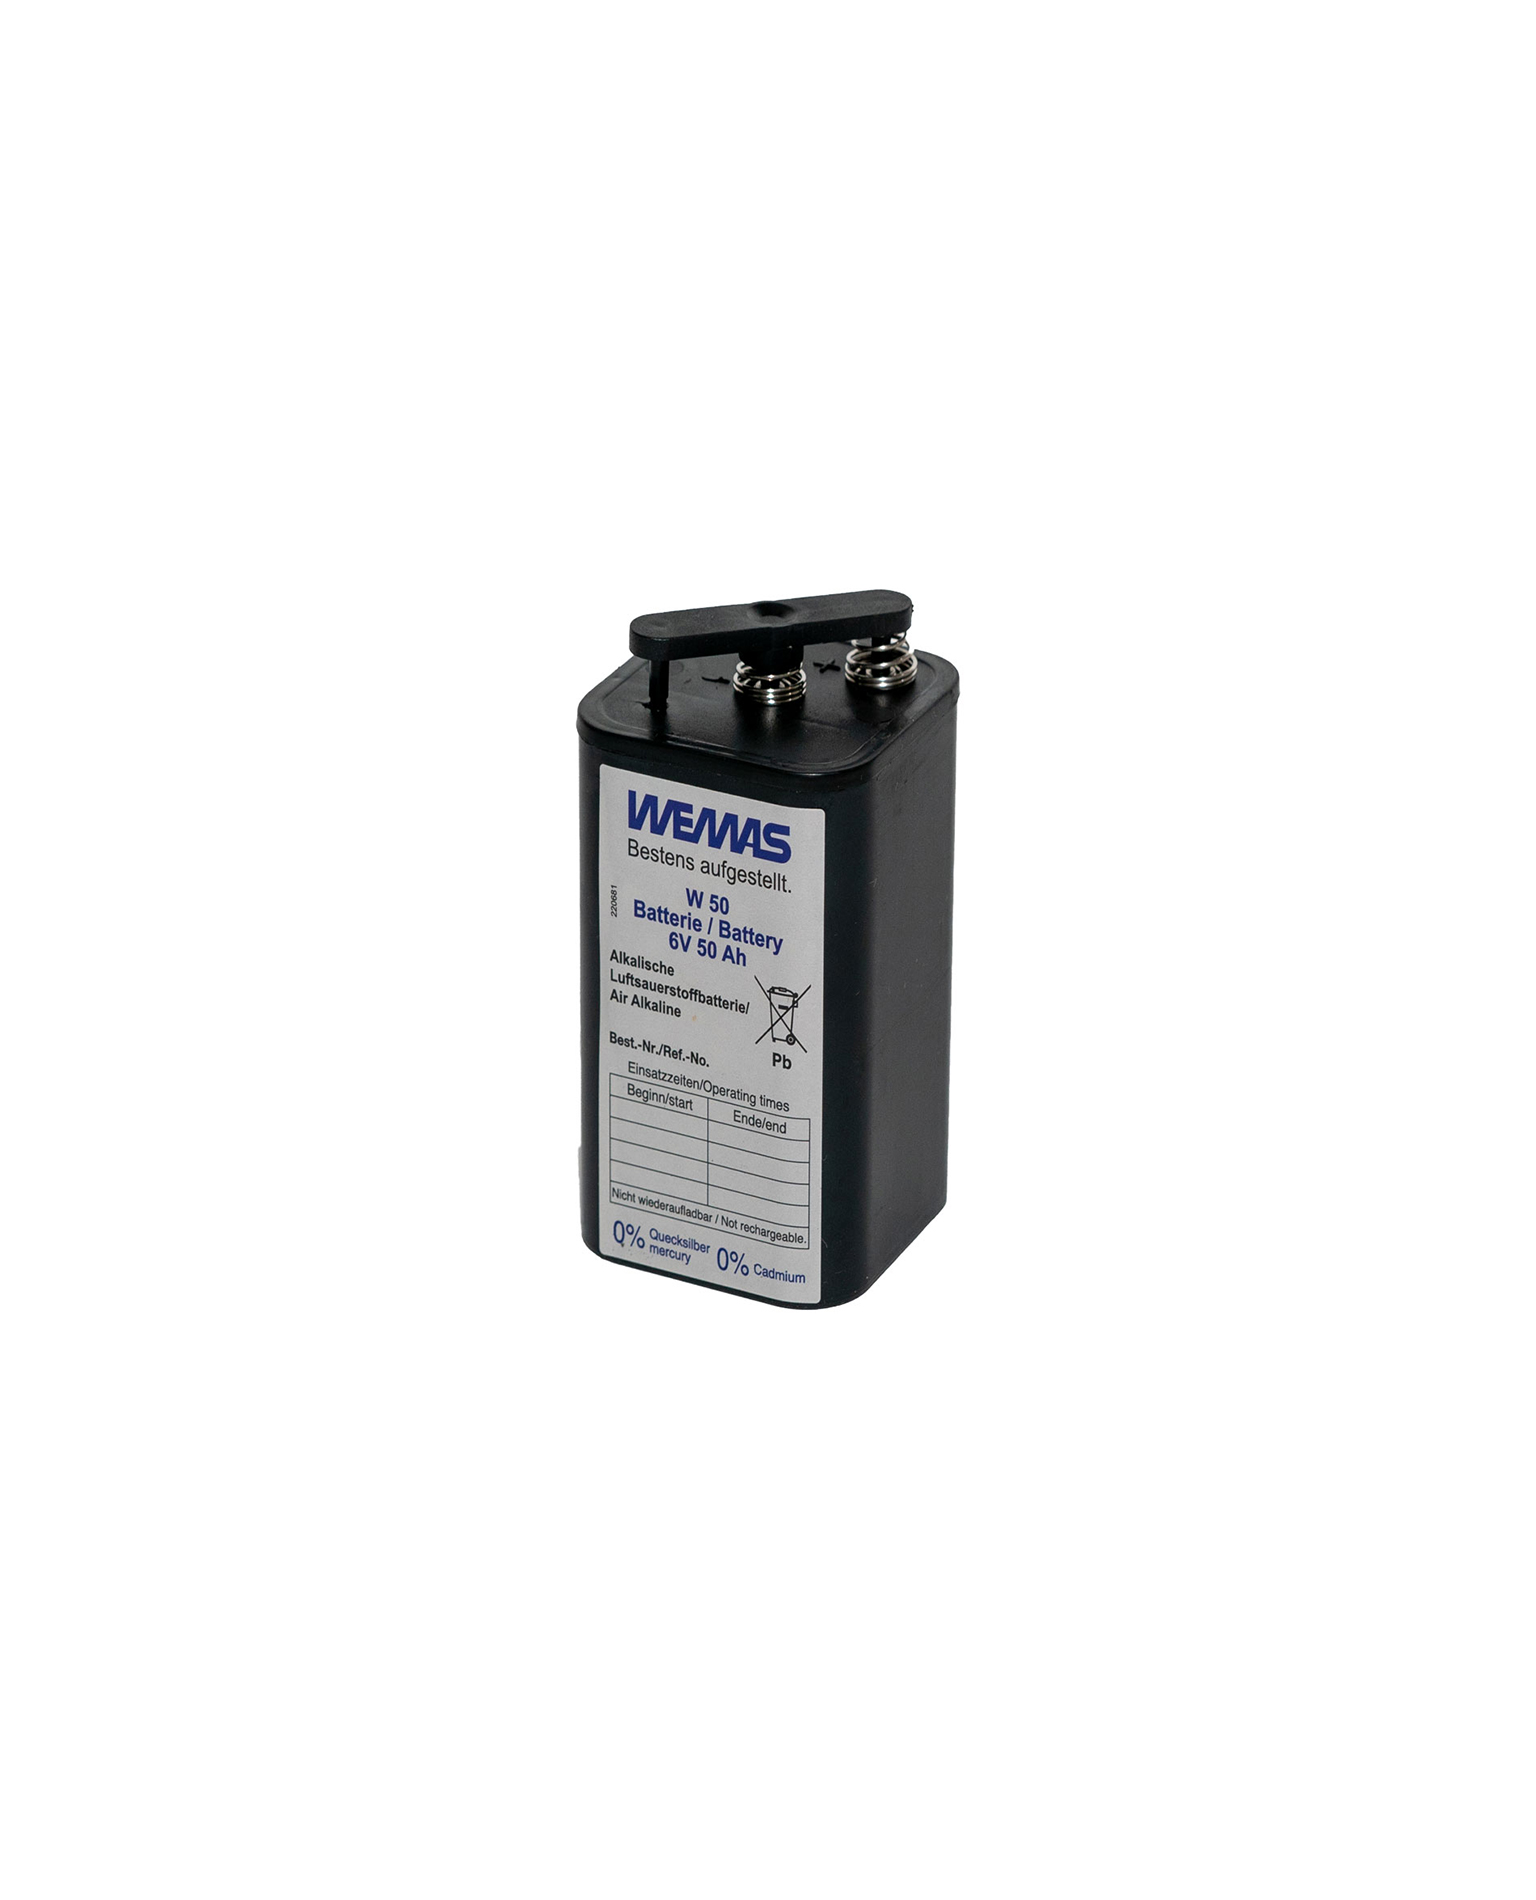 Luftsauerstoff-Batterie 6V/50AH